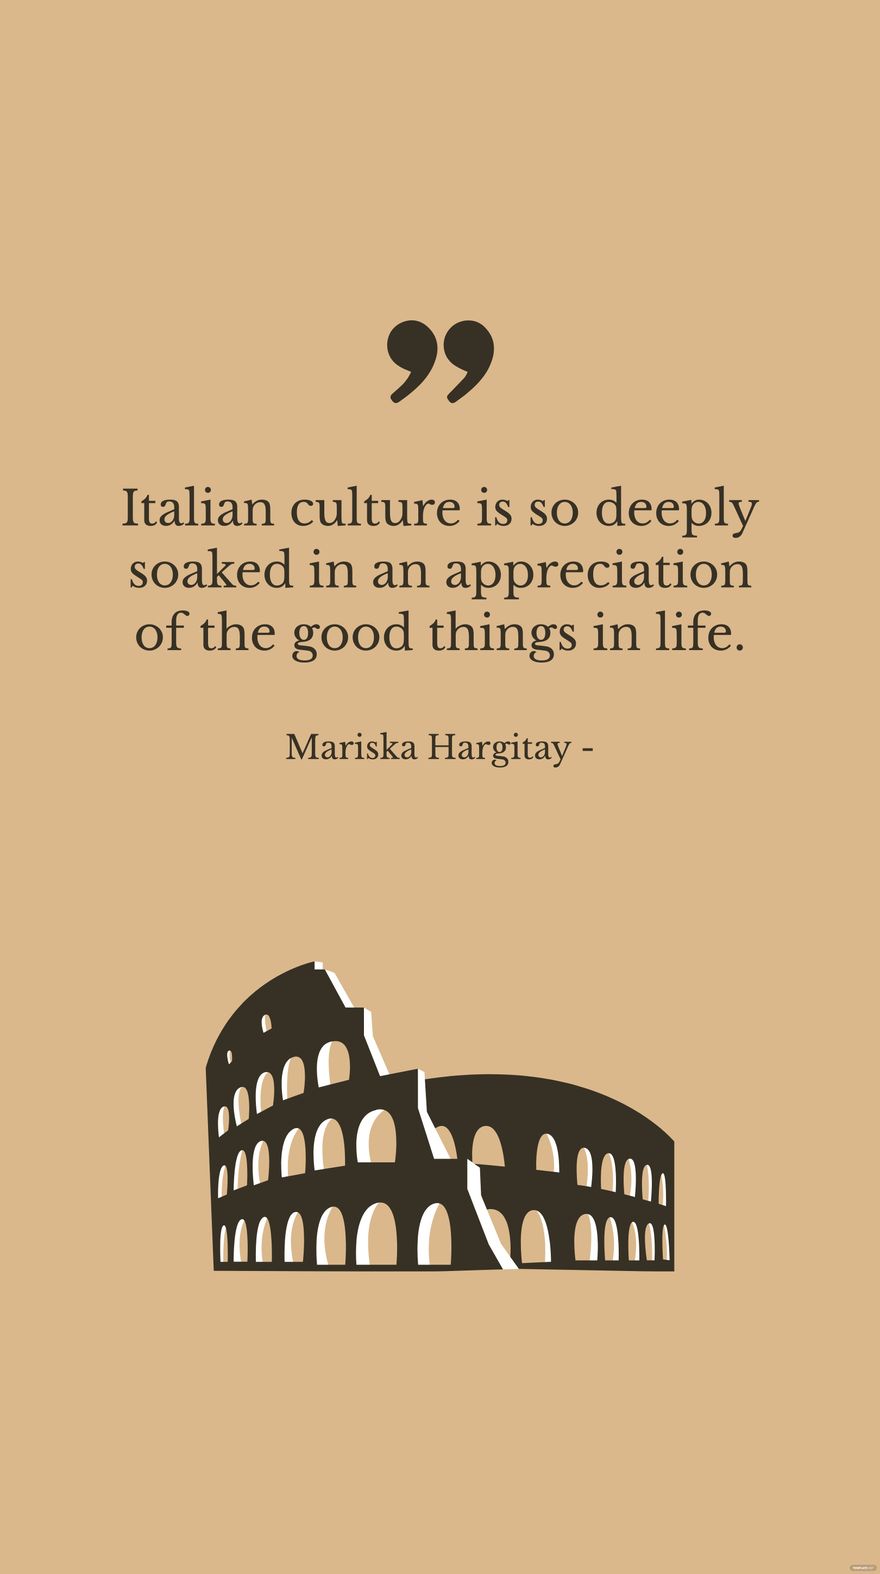 Free Mariska Hargitay - Italian culture is so deeply soaked in an appreciation of the good things in life. in JPG